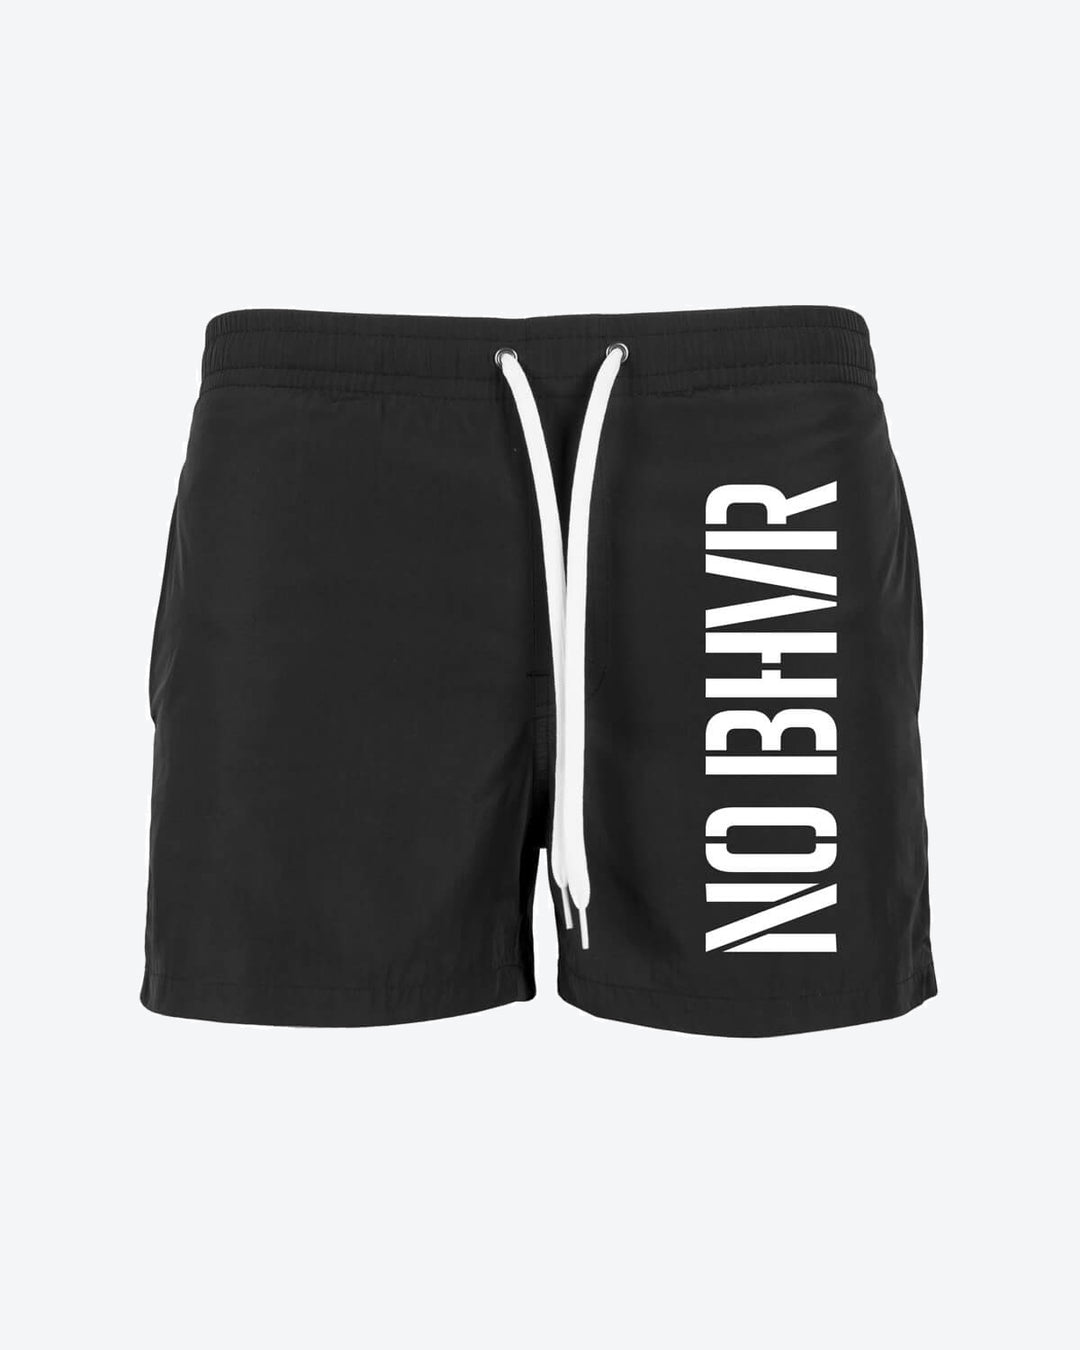 NO BHVR Swim Shorts (Vertical Logo)